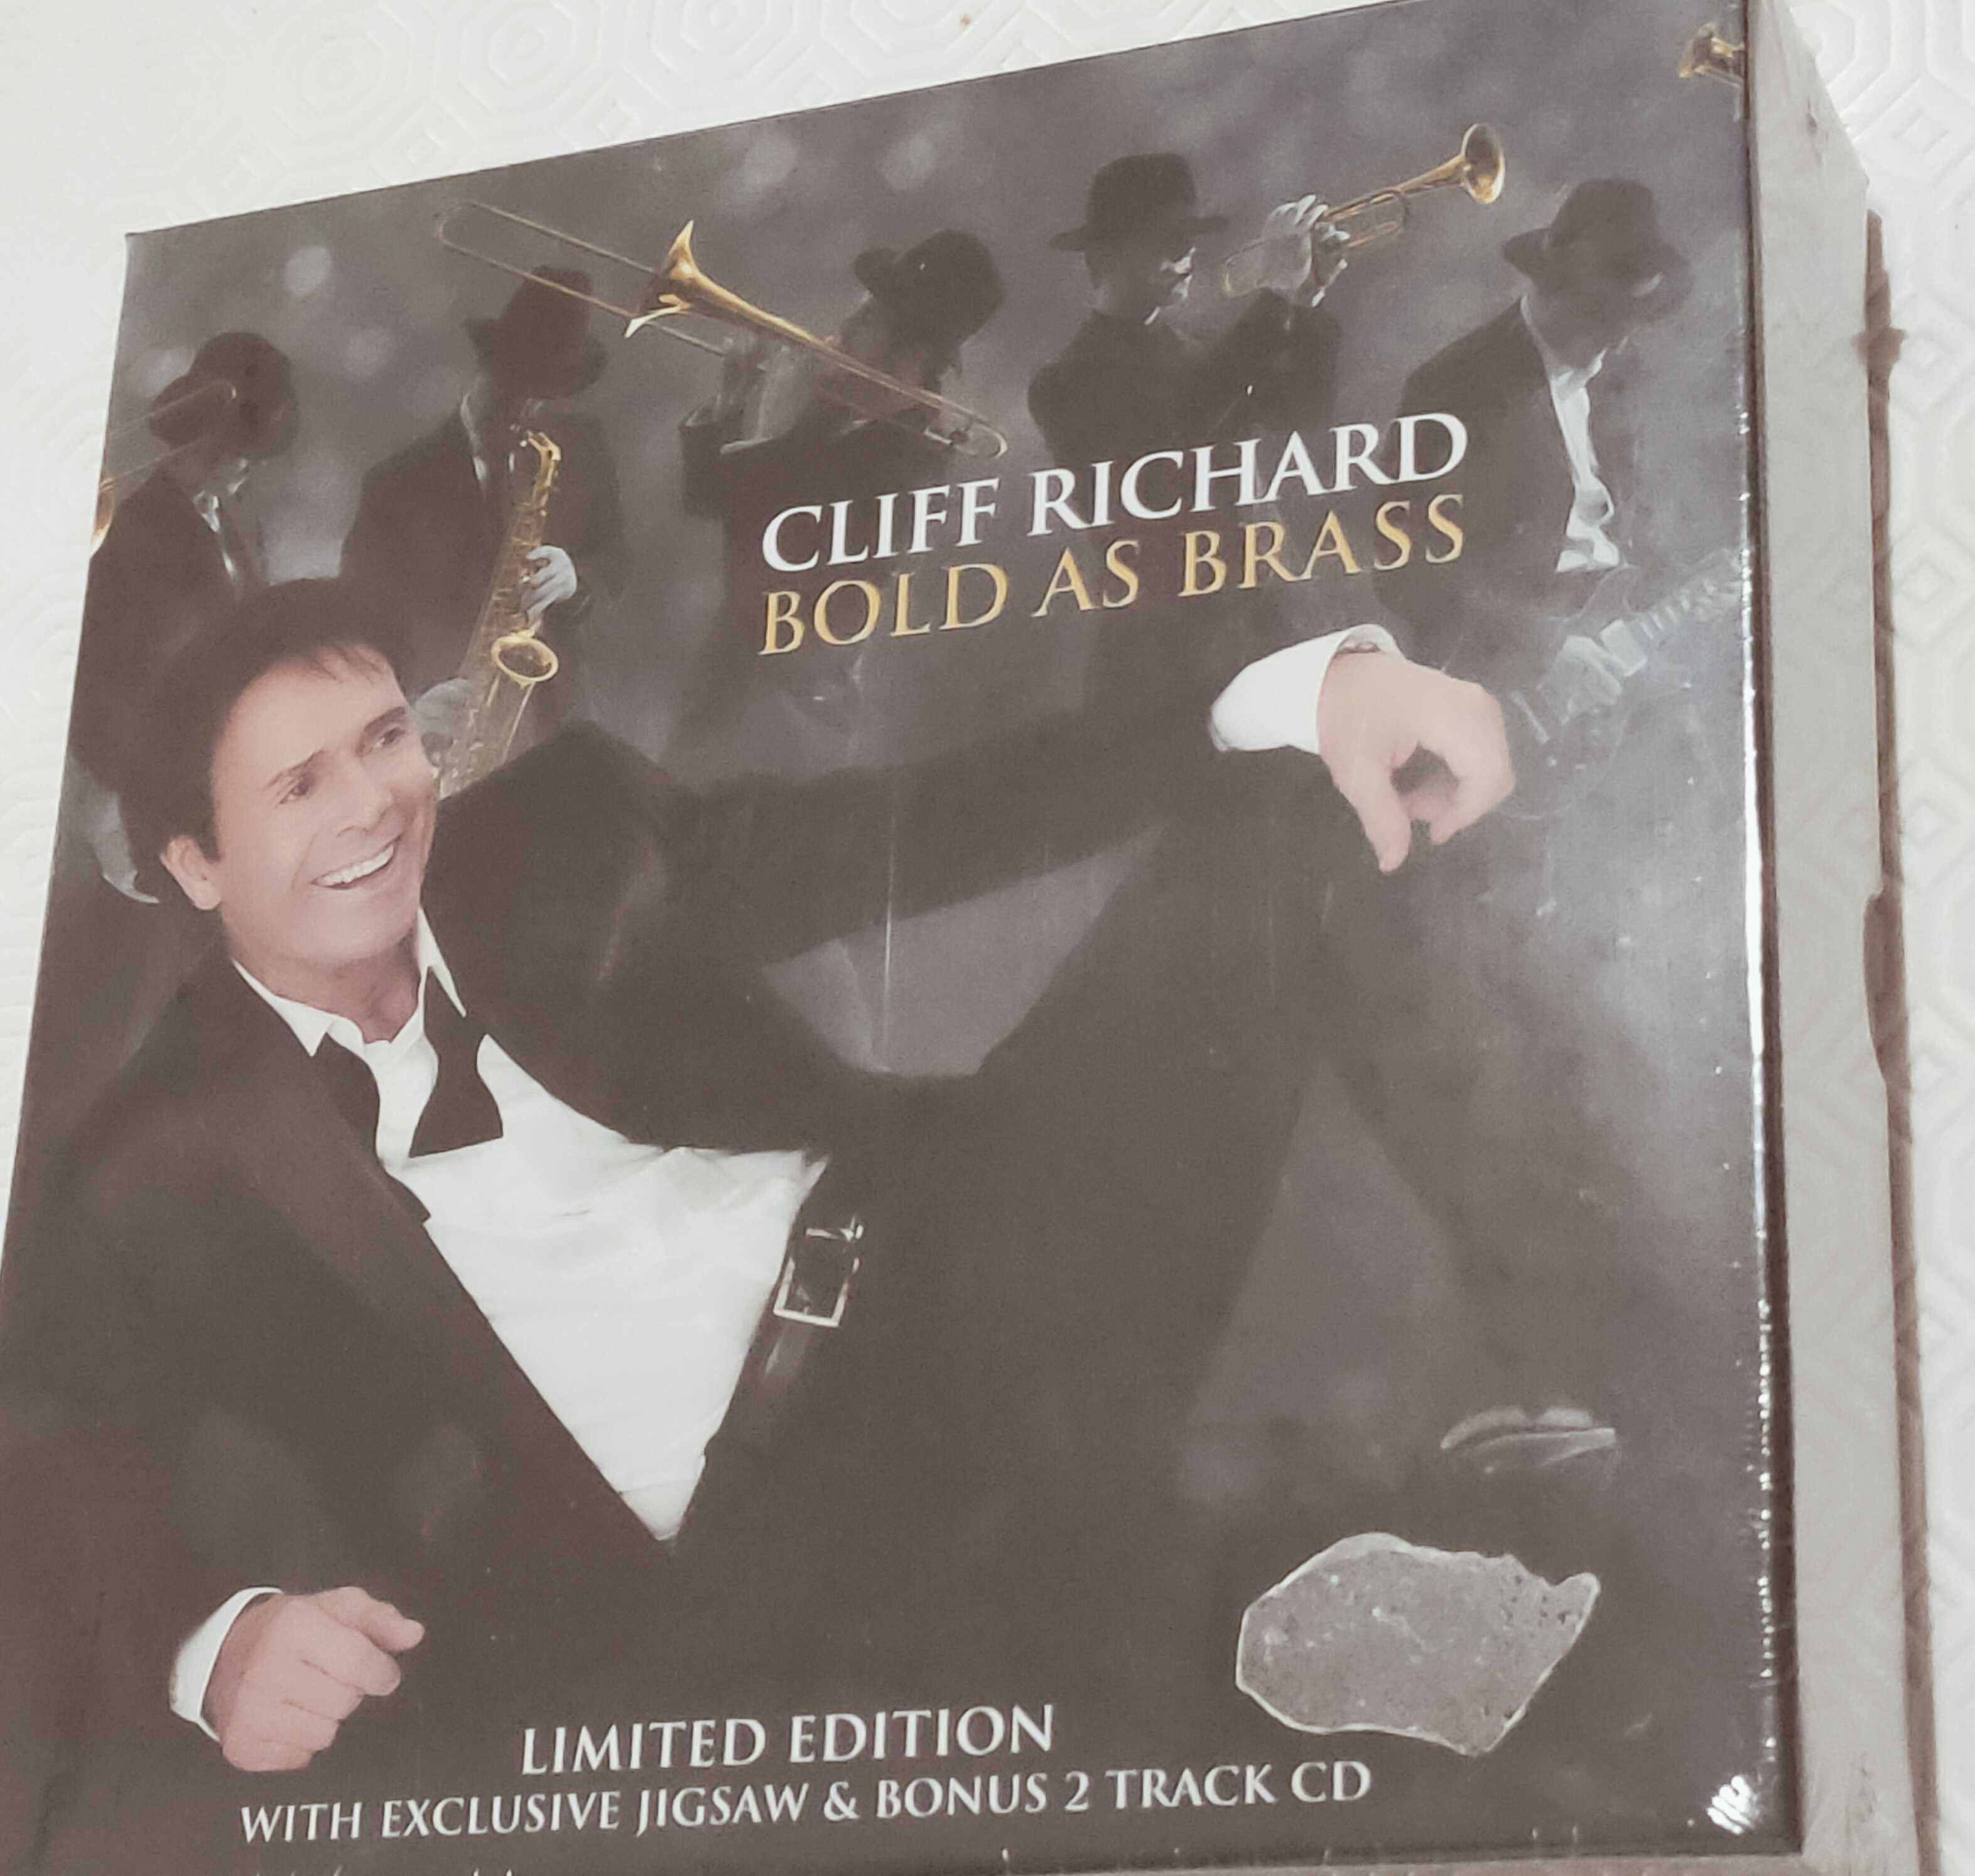 CD duplo novo Cliff Richard Bold as Brass Limited edition